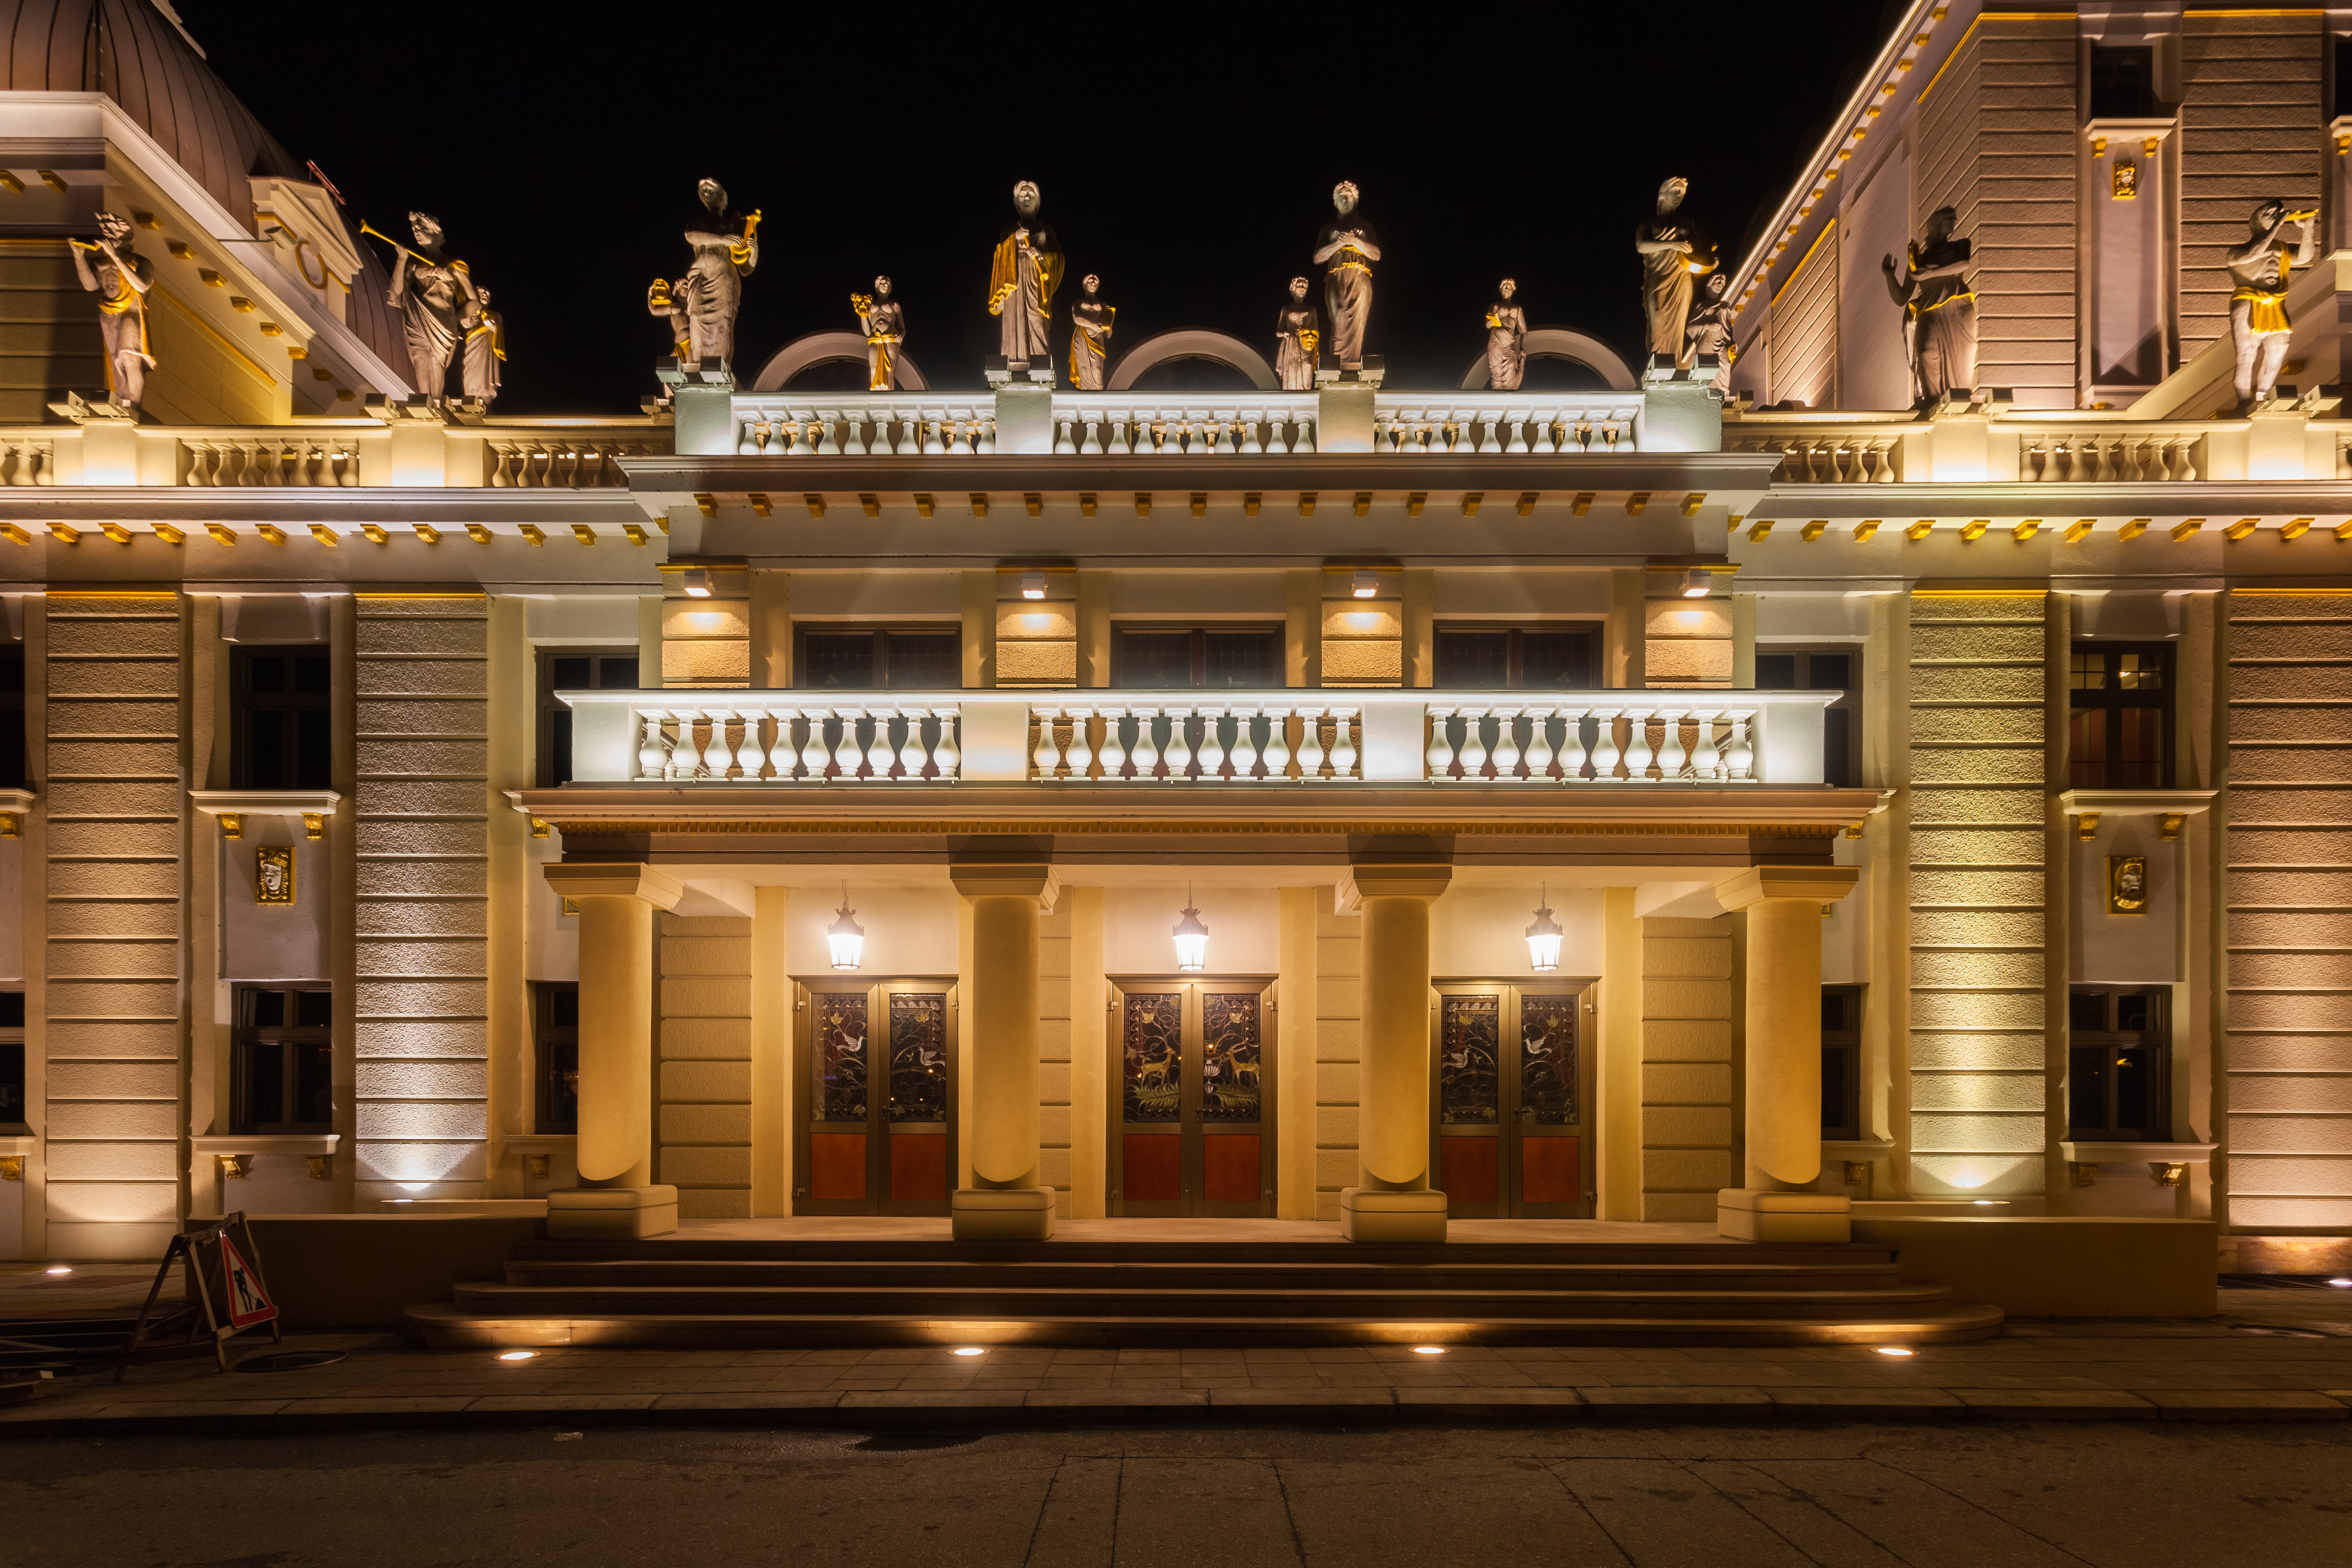 Teatro Nacional, Skopie, Macedonia, 2014-04-17, DD 94